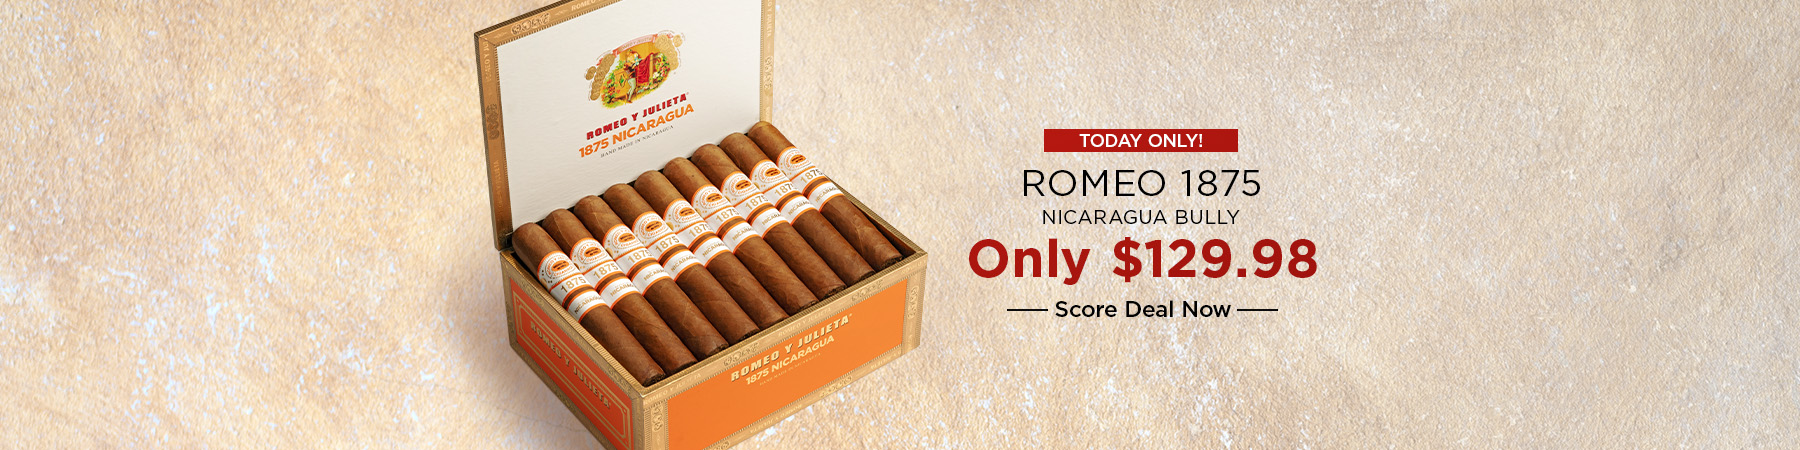 Romeo 1875 Nicaragua Bully $129.98